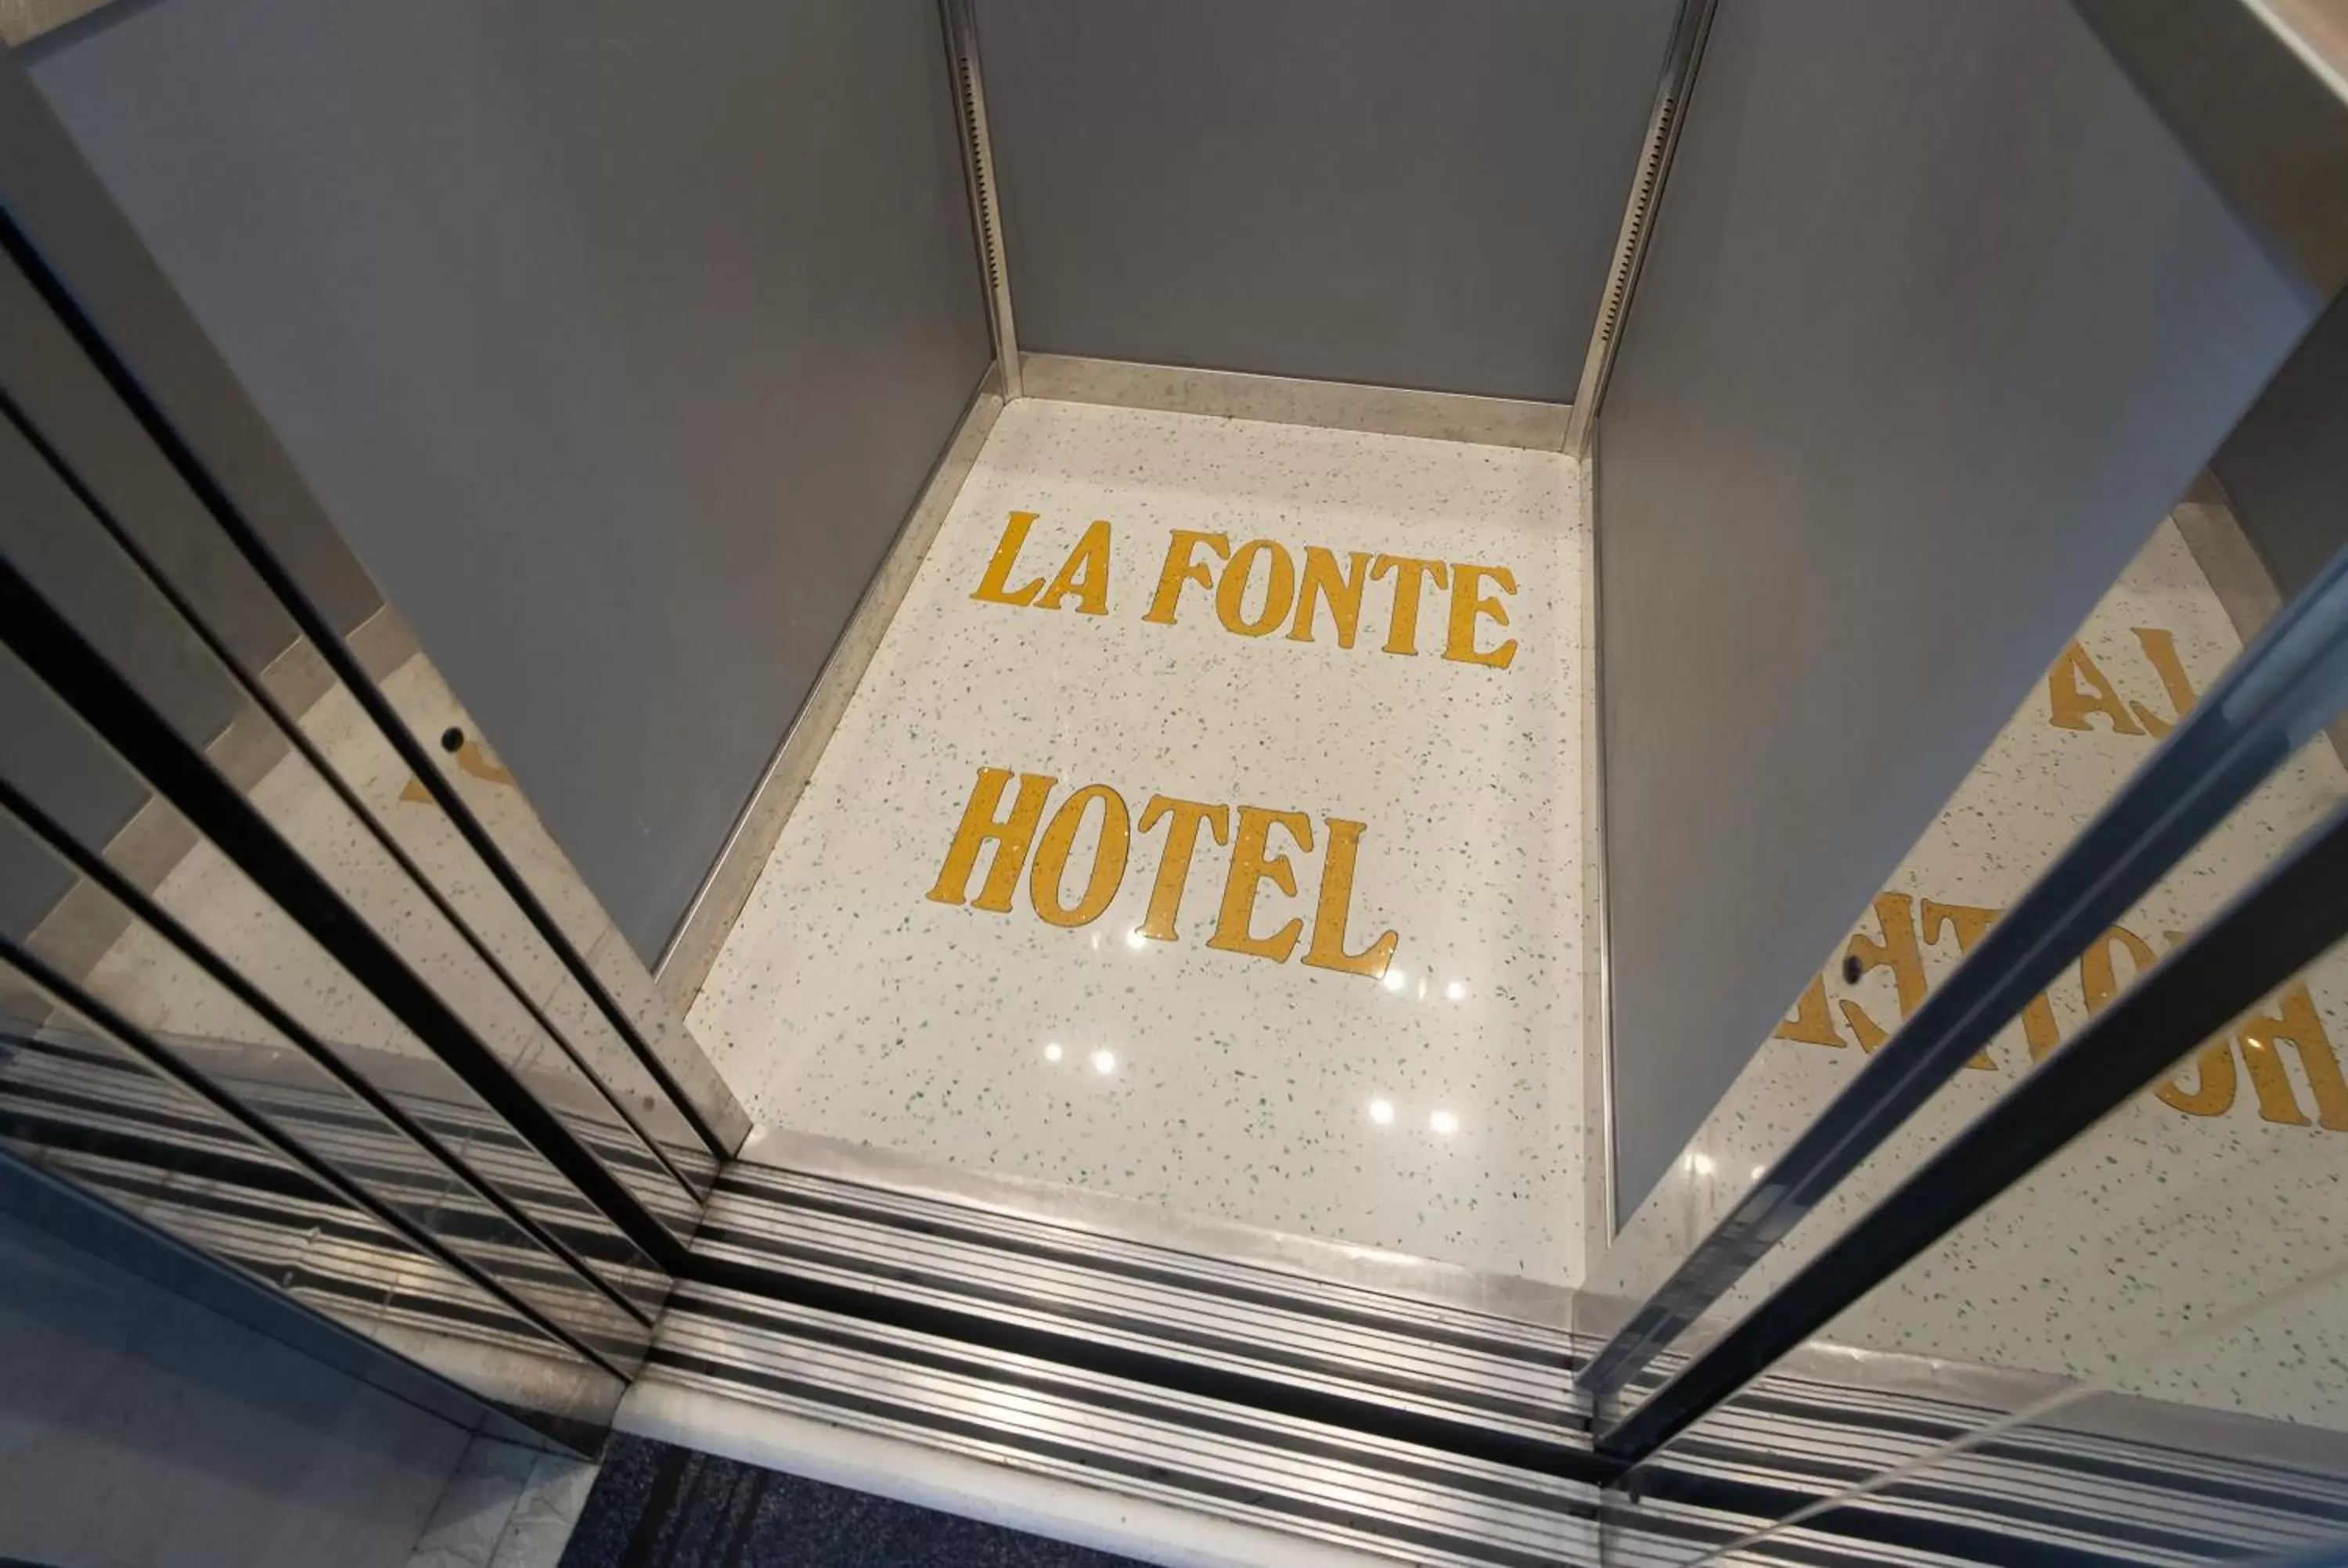 Property logo or sign in Hotel La Fonte